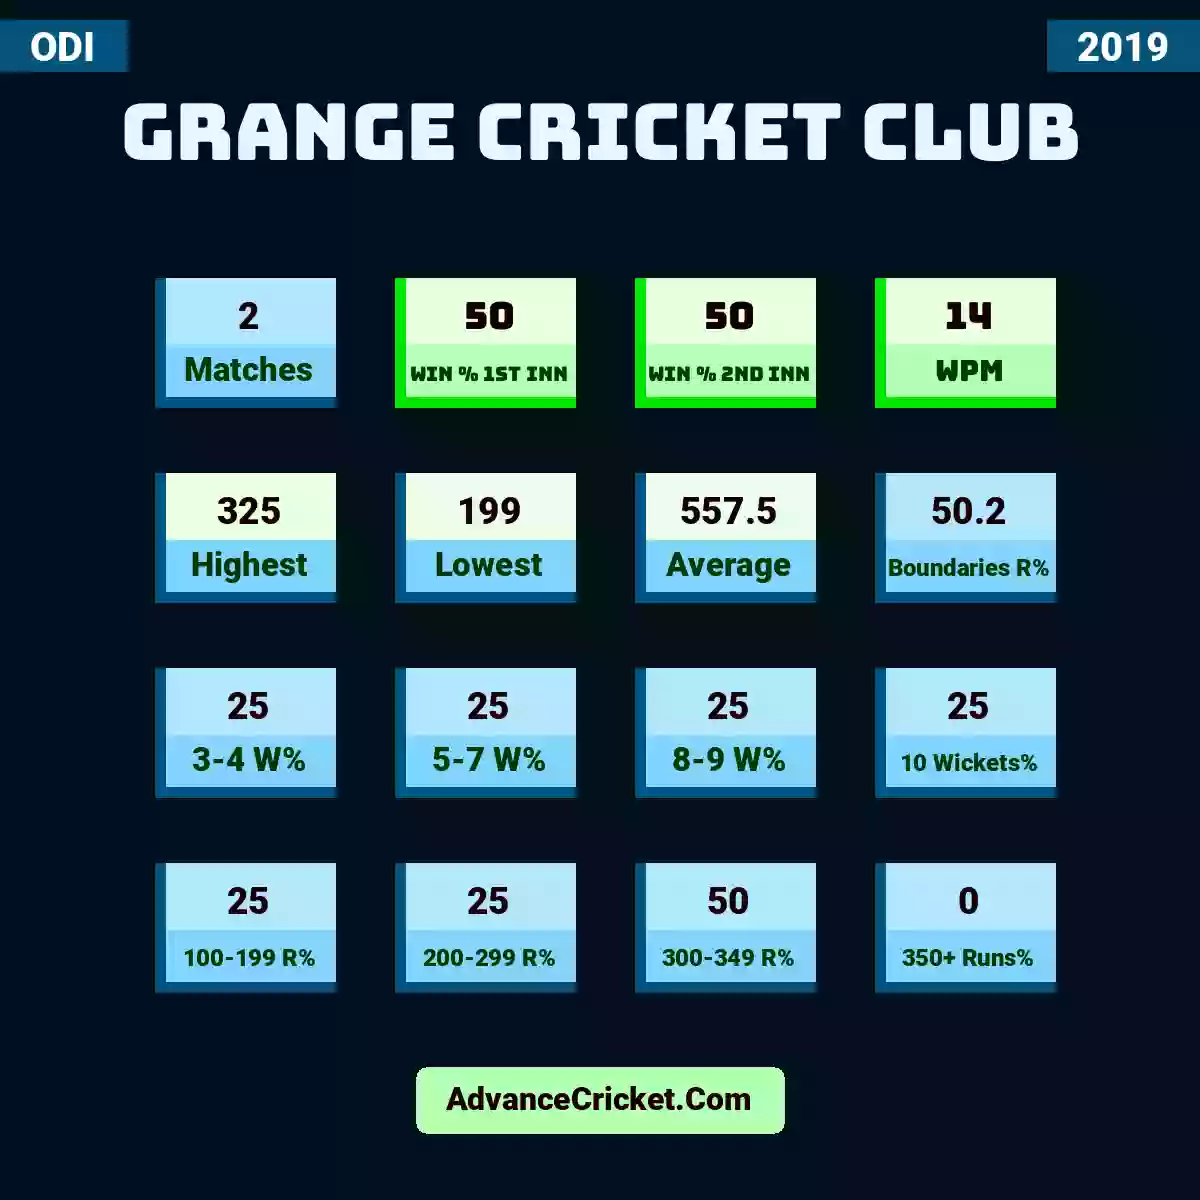 Image showing Grange Cricket Club with Matches: 2, Win % 1st Inn: 50, Win % 2nd Inn: 50, WPM: 14, Highest: 325, Lowest: 199, Average: 557.5, Boundaries R%: 50.2, 3-4 W%: 25, 5-7 W%: 25, 8-9 W%: 25, 10 Wickets%: 25, 100-199 R%: 25, 200-299 R%: 25, 300-349 R%: 50, 350+ Runs%: 0.